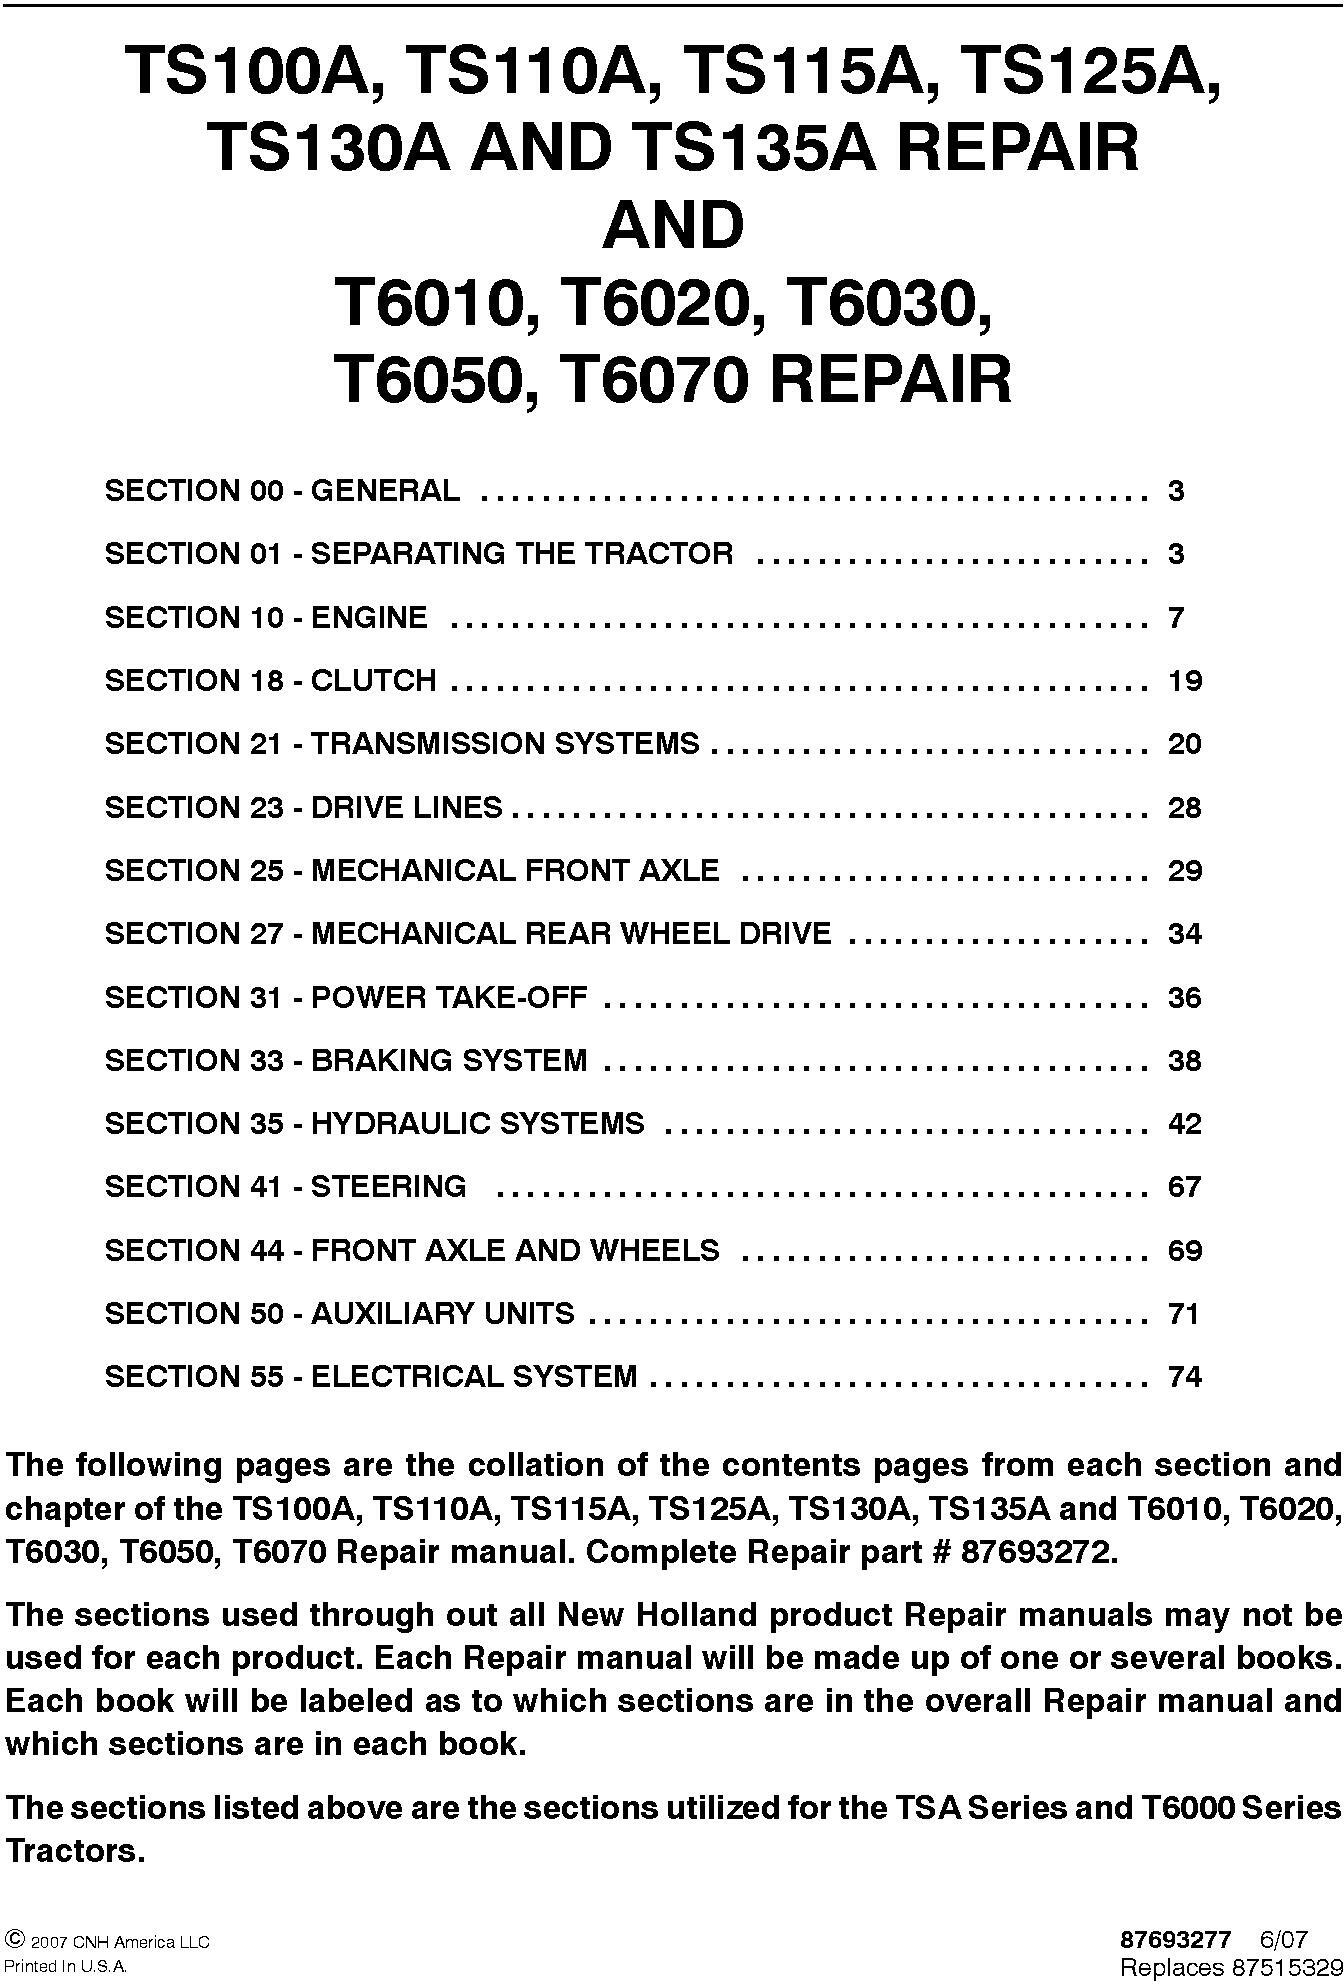 New Holland TS100A, TS110A, TS115A, TS125A, TS130A, TS135A, T6010, T6020, T6030,T6050 Service Manual - 19631